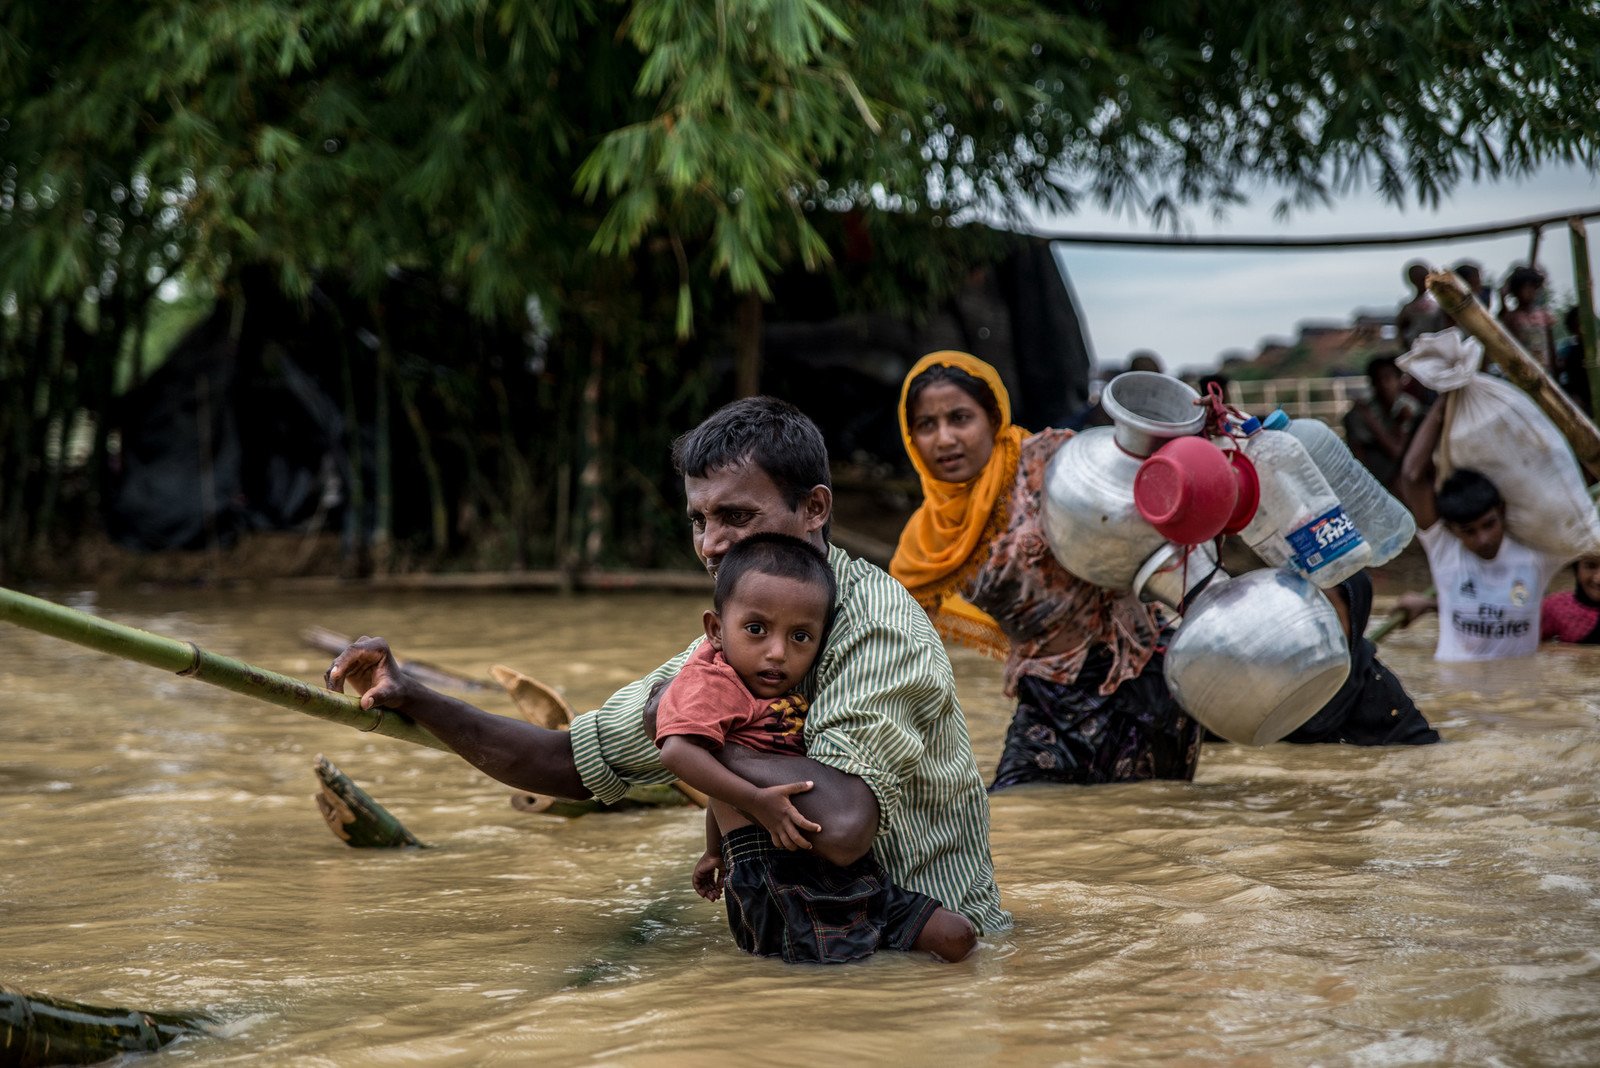 Balakhali难民营位于孟加拉境内，一名抱著儿子的父亲，正利用破烂的竹桥渡过这条位于难民营附近的河流。连续三天的大雨令许多难民临时栖身所出现水浸，迫使他们迁往地势更高的地方。 photo: Aurélie Marrier d'Unienville